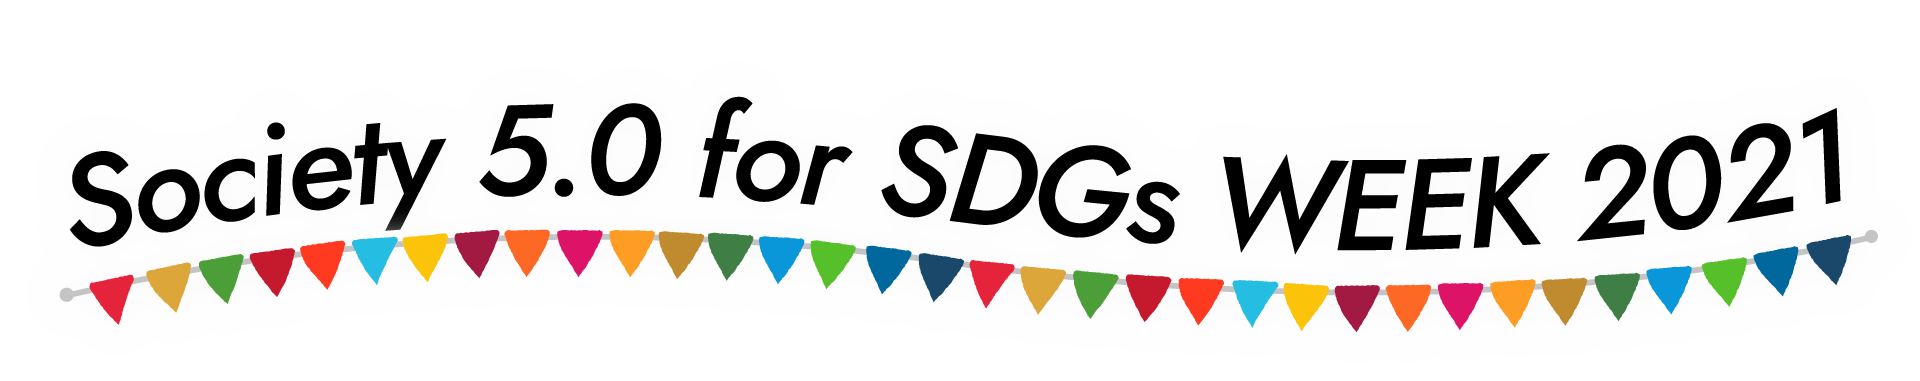 Society 5.0 for SDGs WEEK 2021